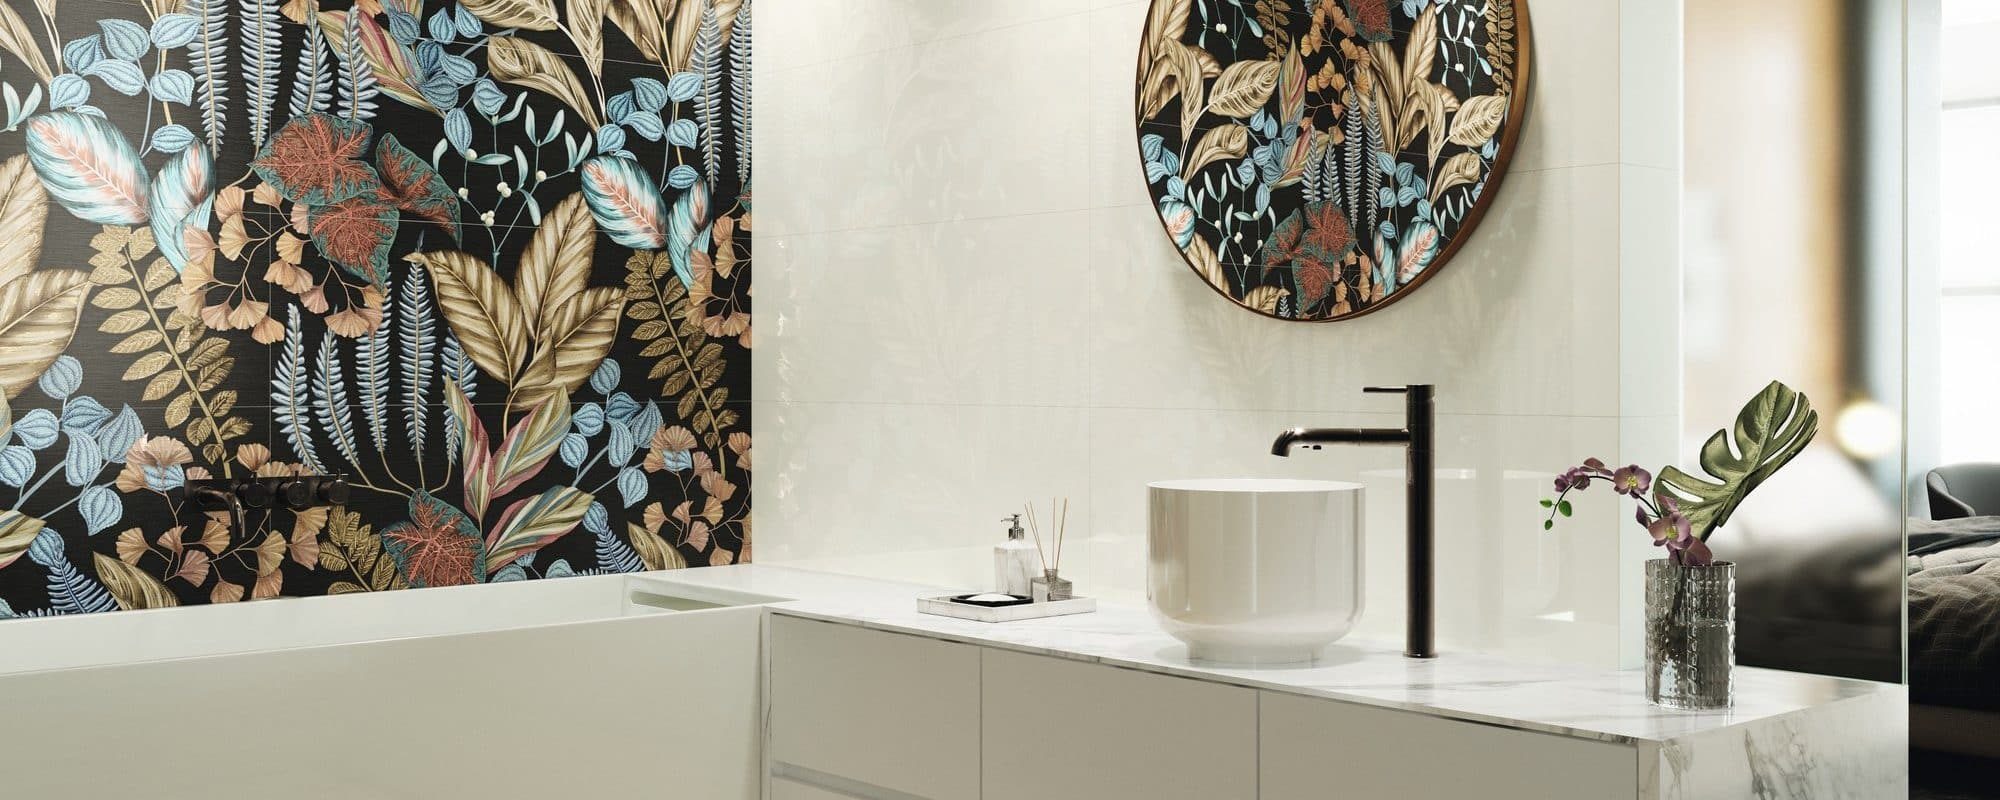 KOEN wood effect porcelain bathroom tiles uk slider 2